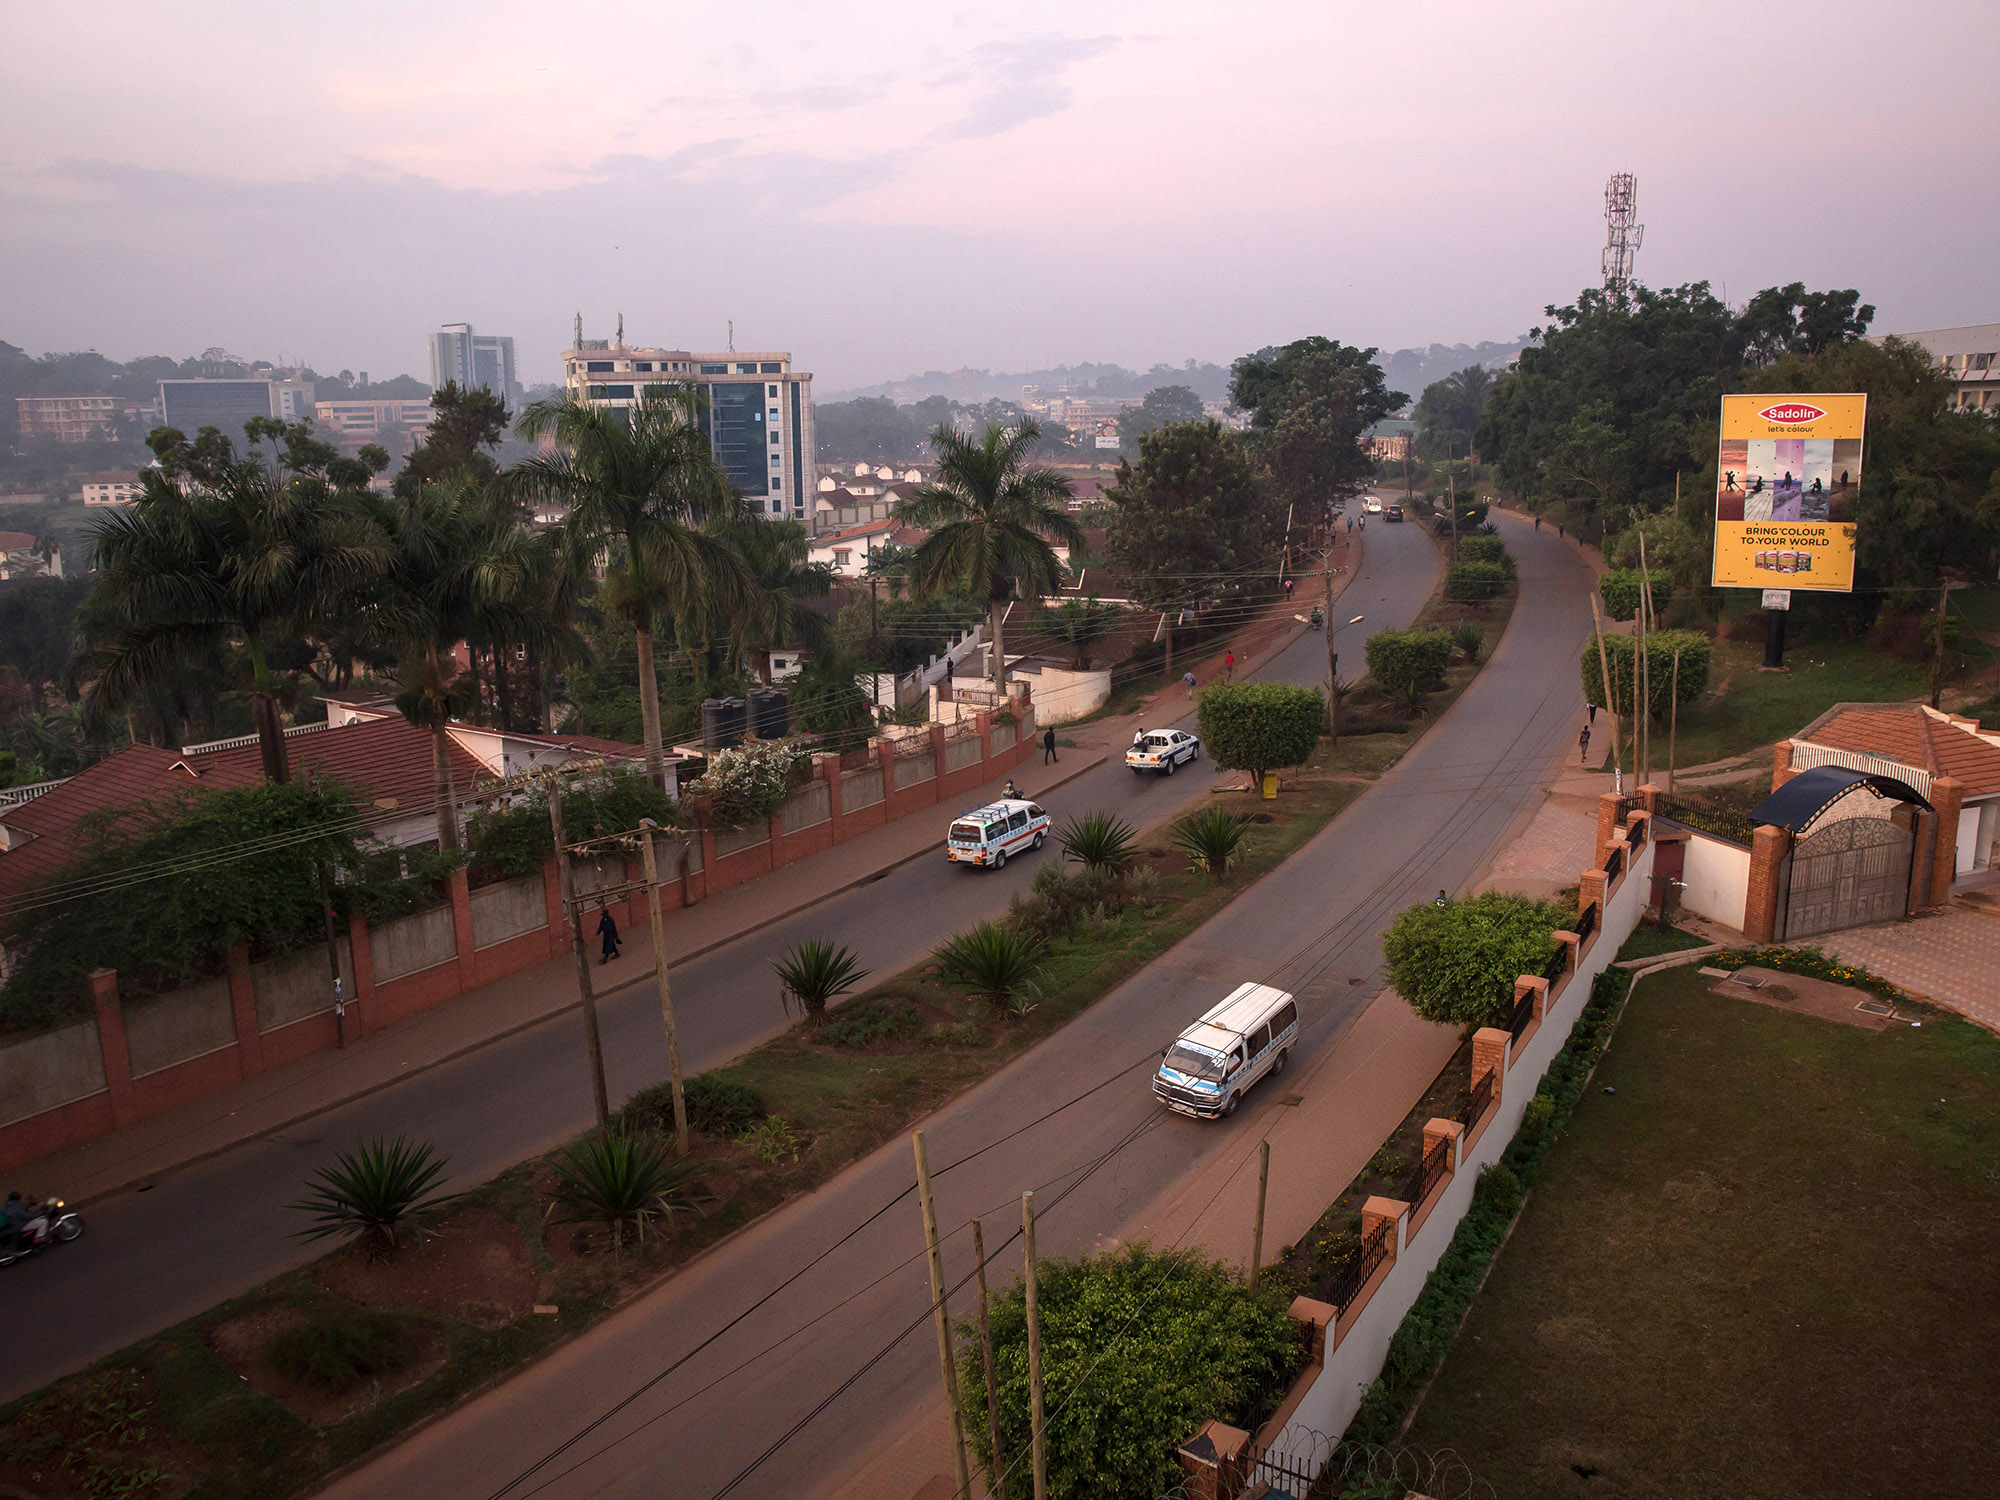 Cars and boda bodas drive along Riga Street, Kampala.